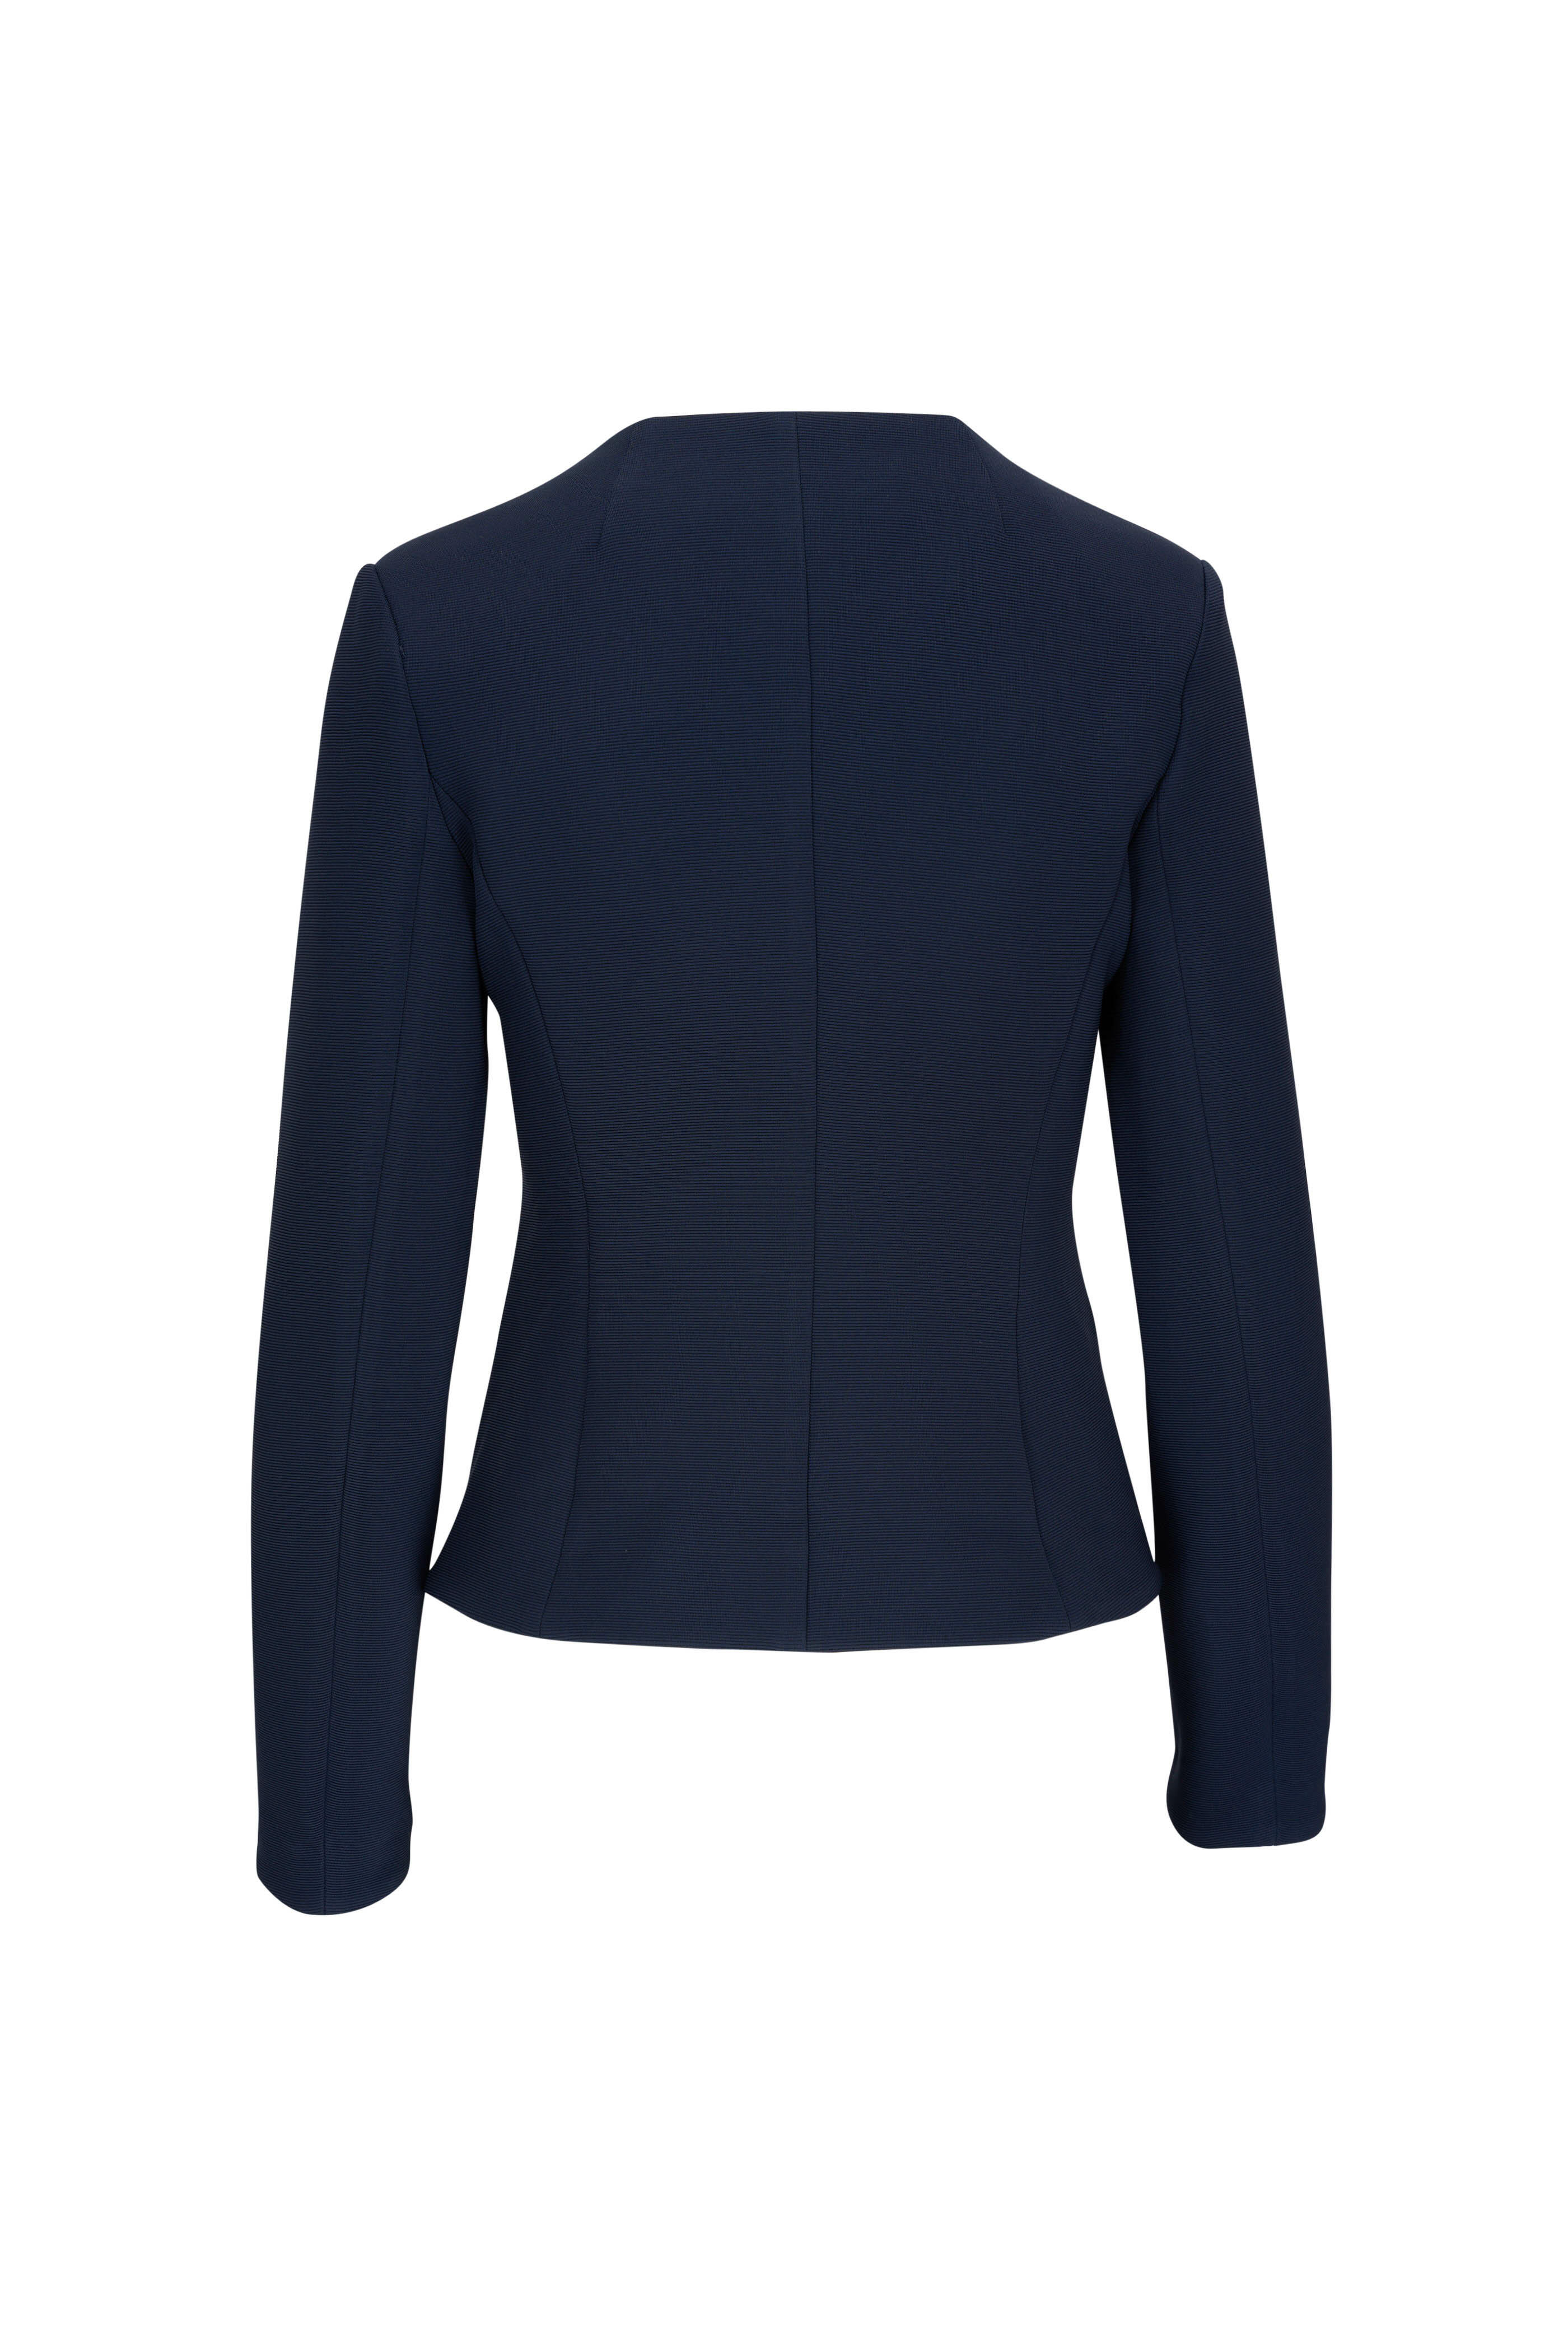 Veronica Beard - Kensington Marine Knit Jacket | Mitchell Stores